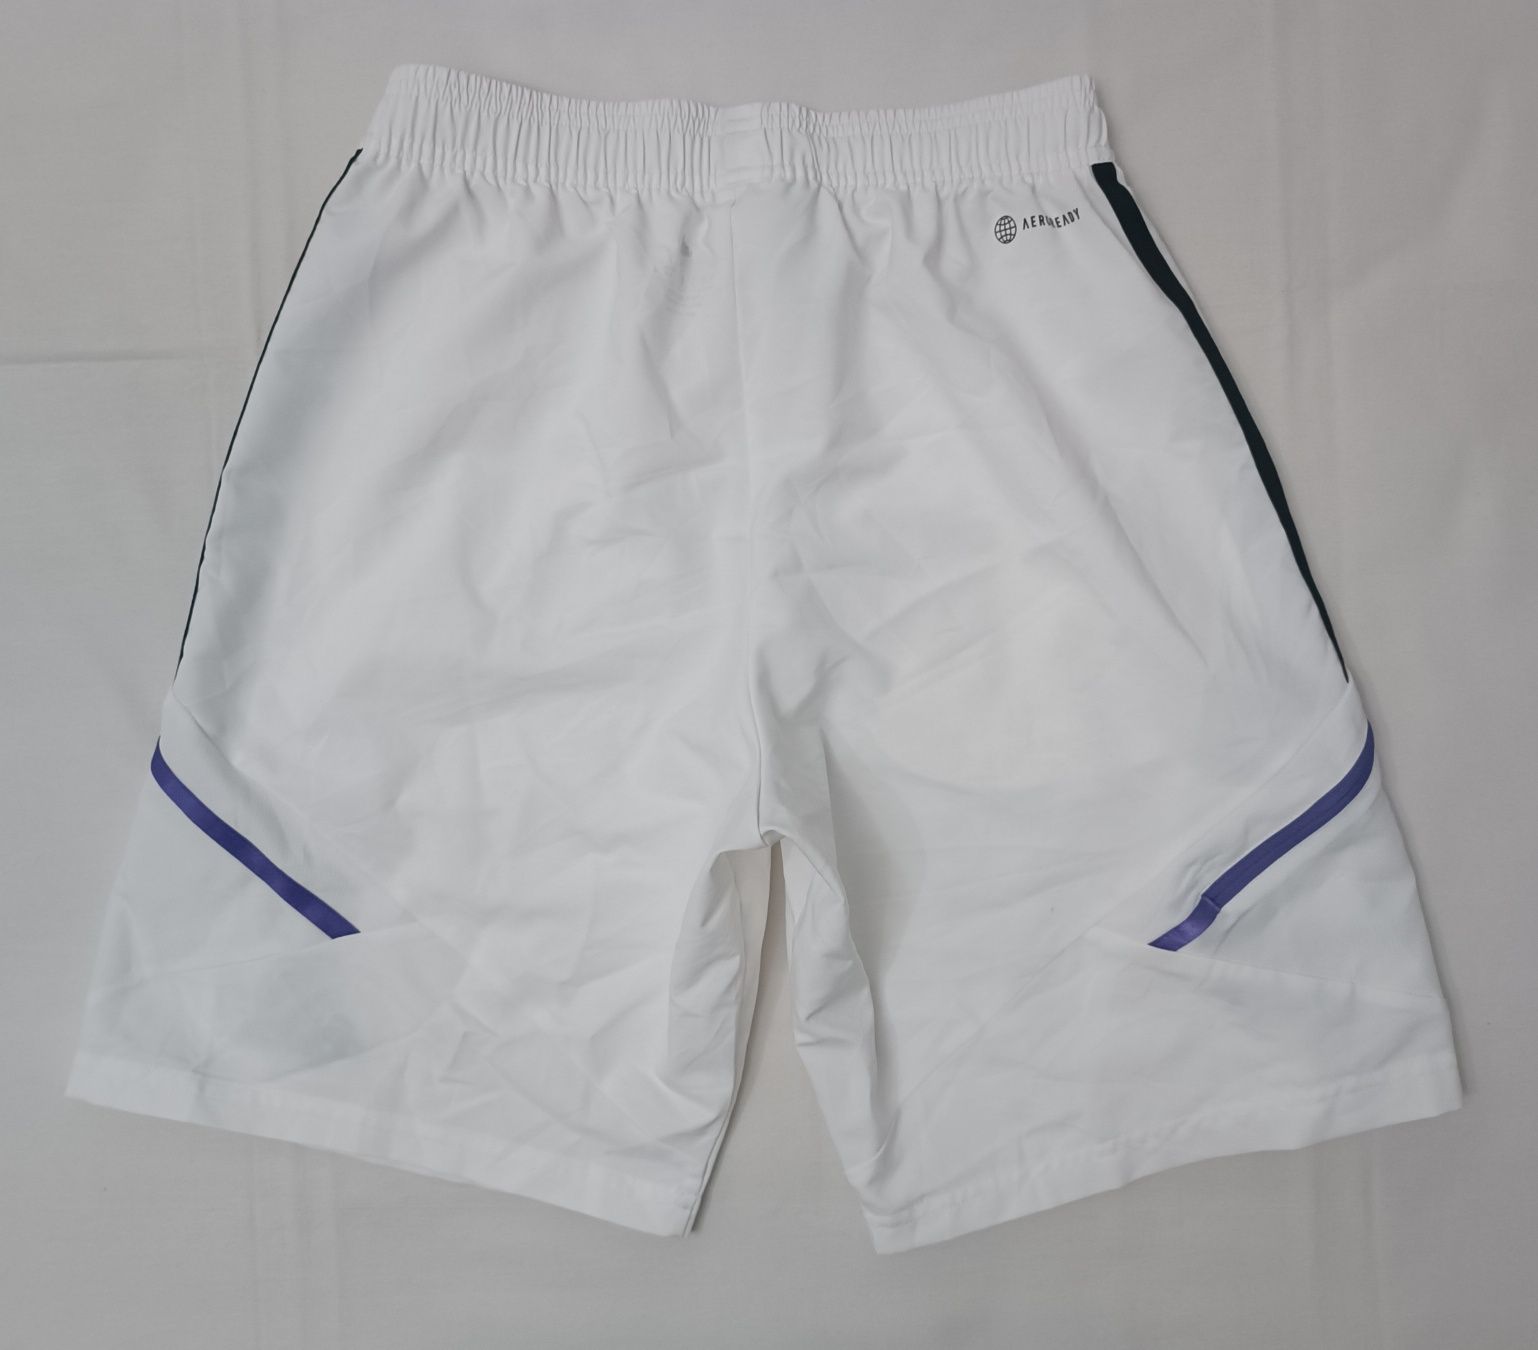 Adidas Real Madrid Shorts оригинални гащета S Адидас Реал Мадрид шорти